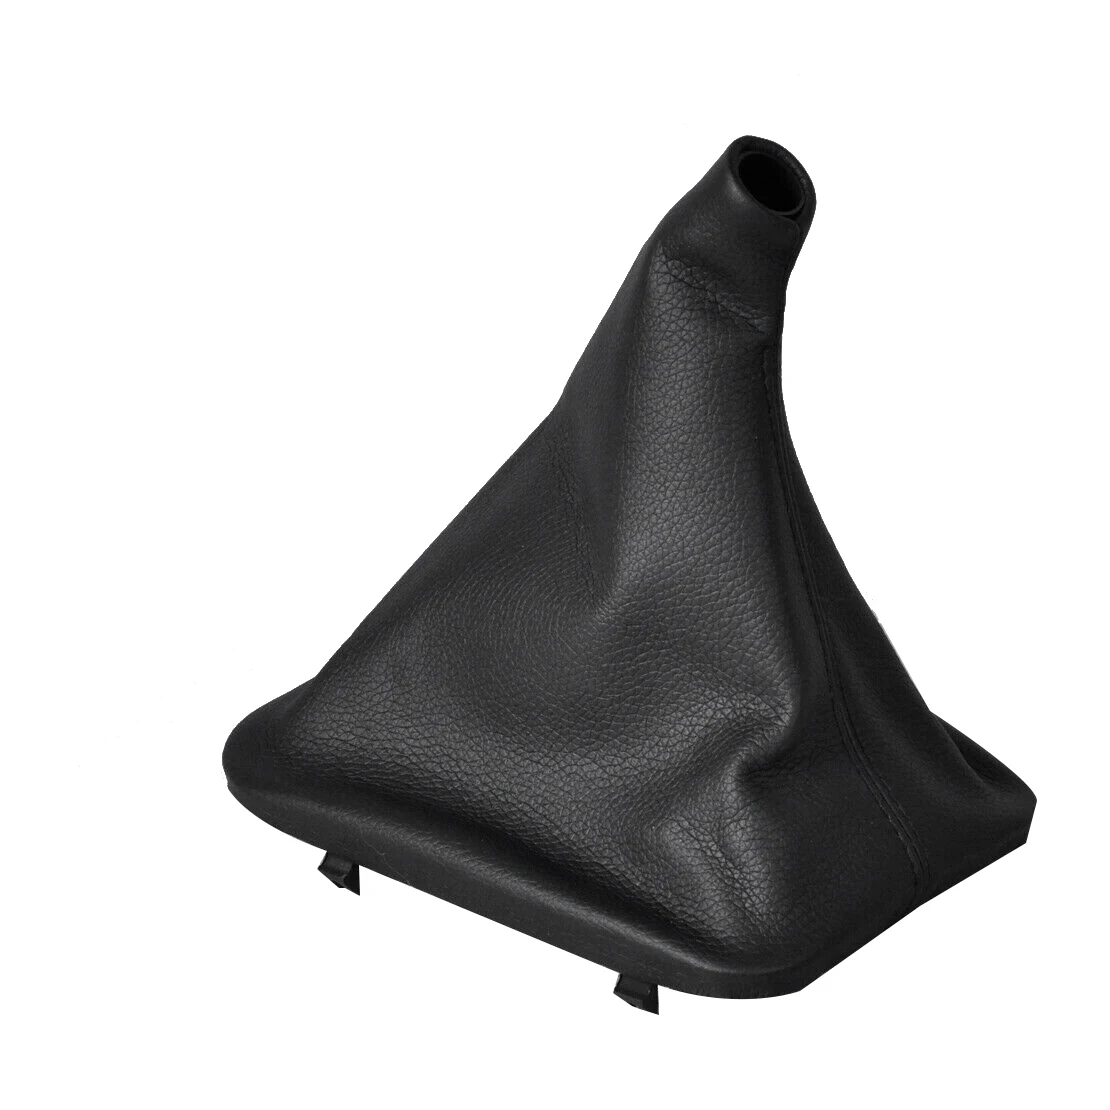 

Car Gear Shift Knob Leather Gaiter Cover for W123 W140 W202